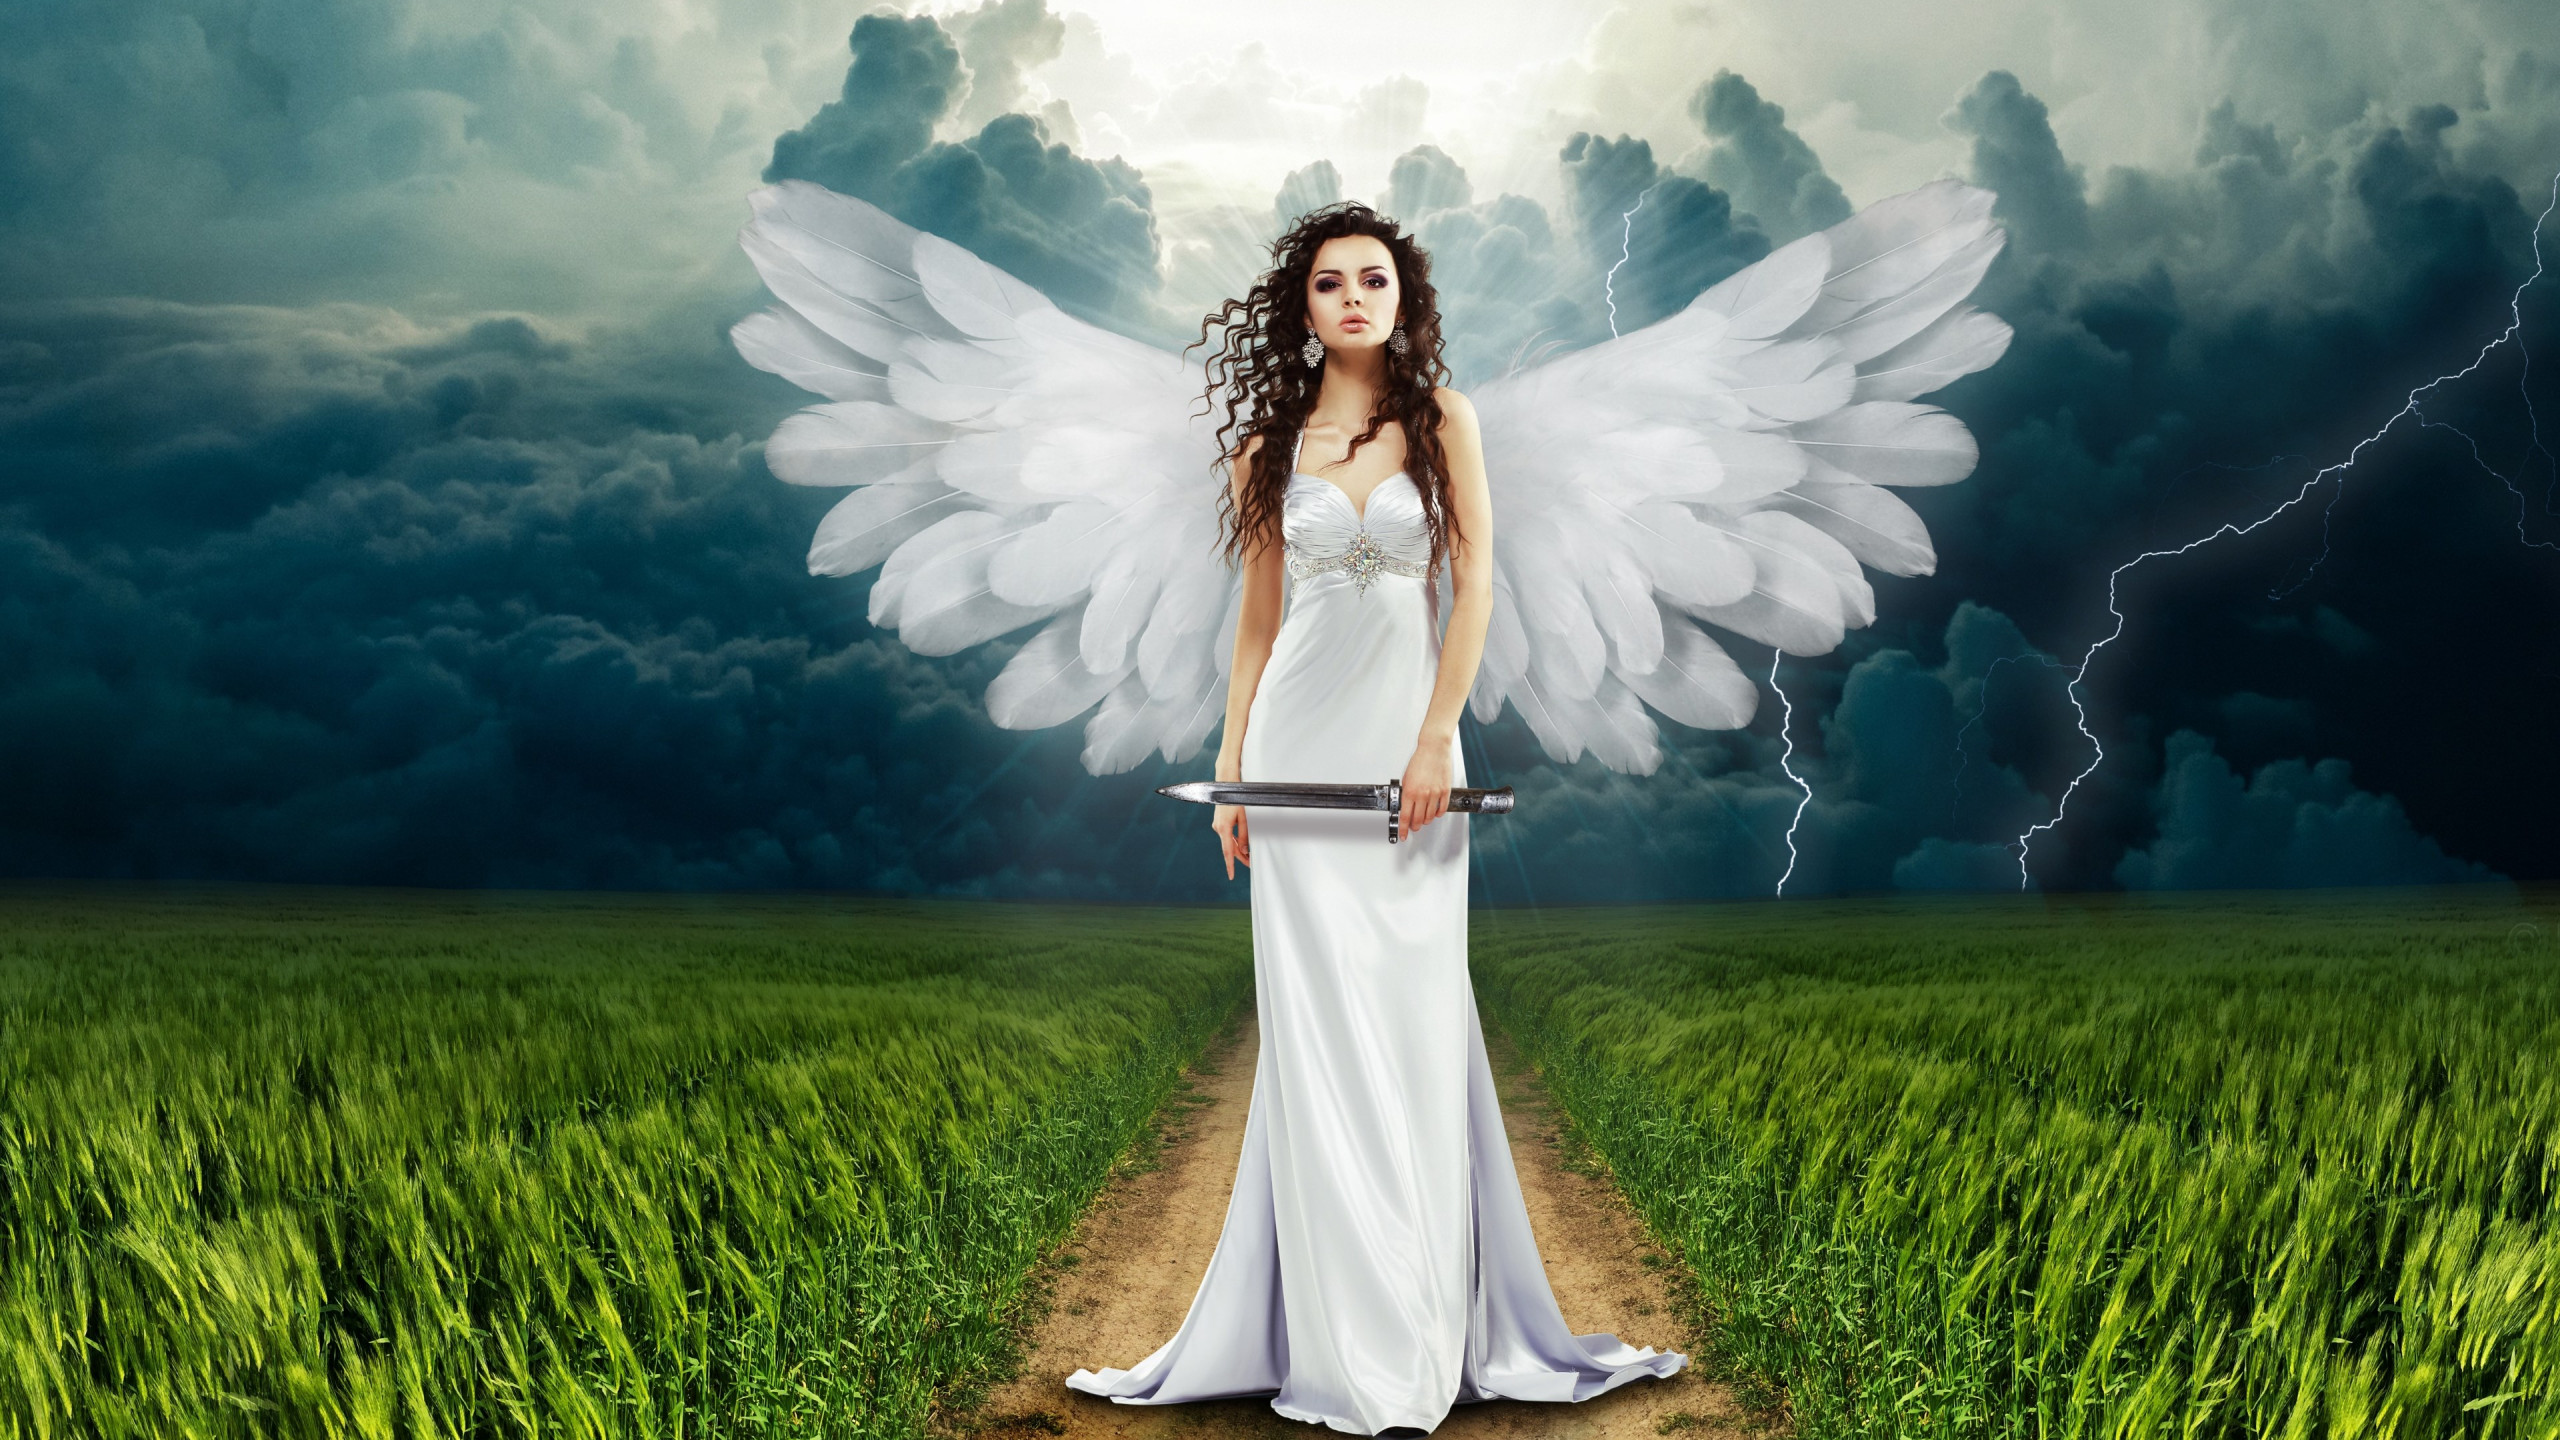 Illustration: Angel art wallpaper 2560x1440